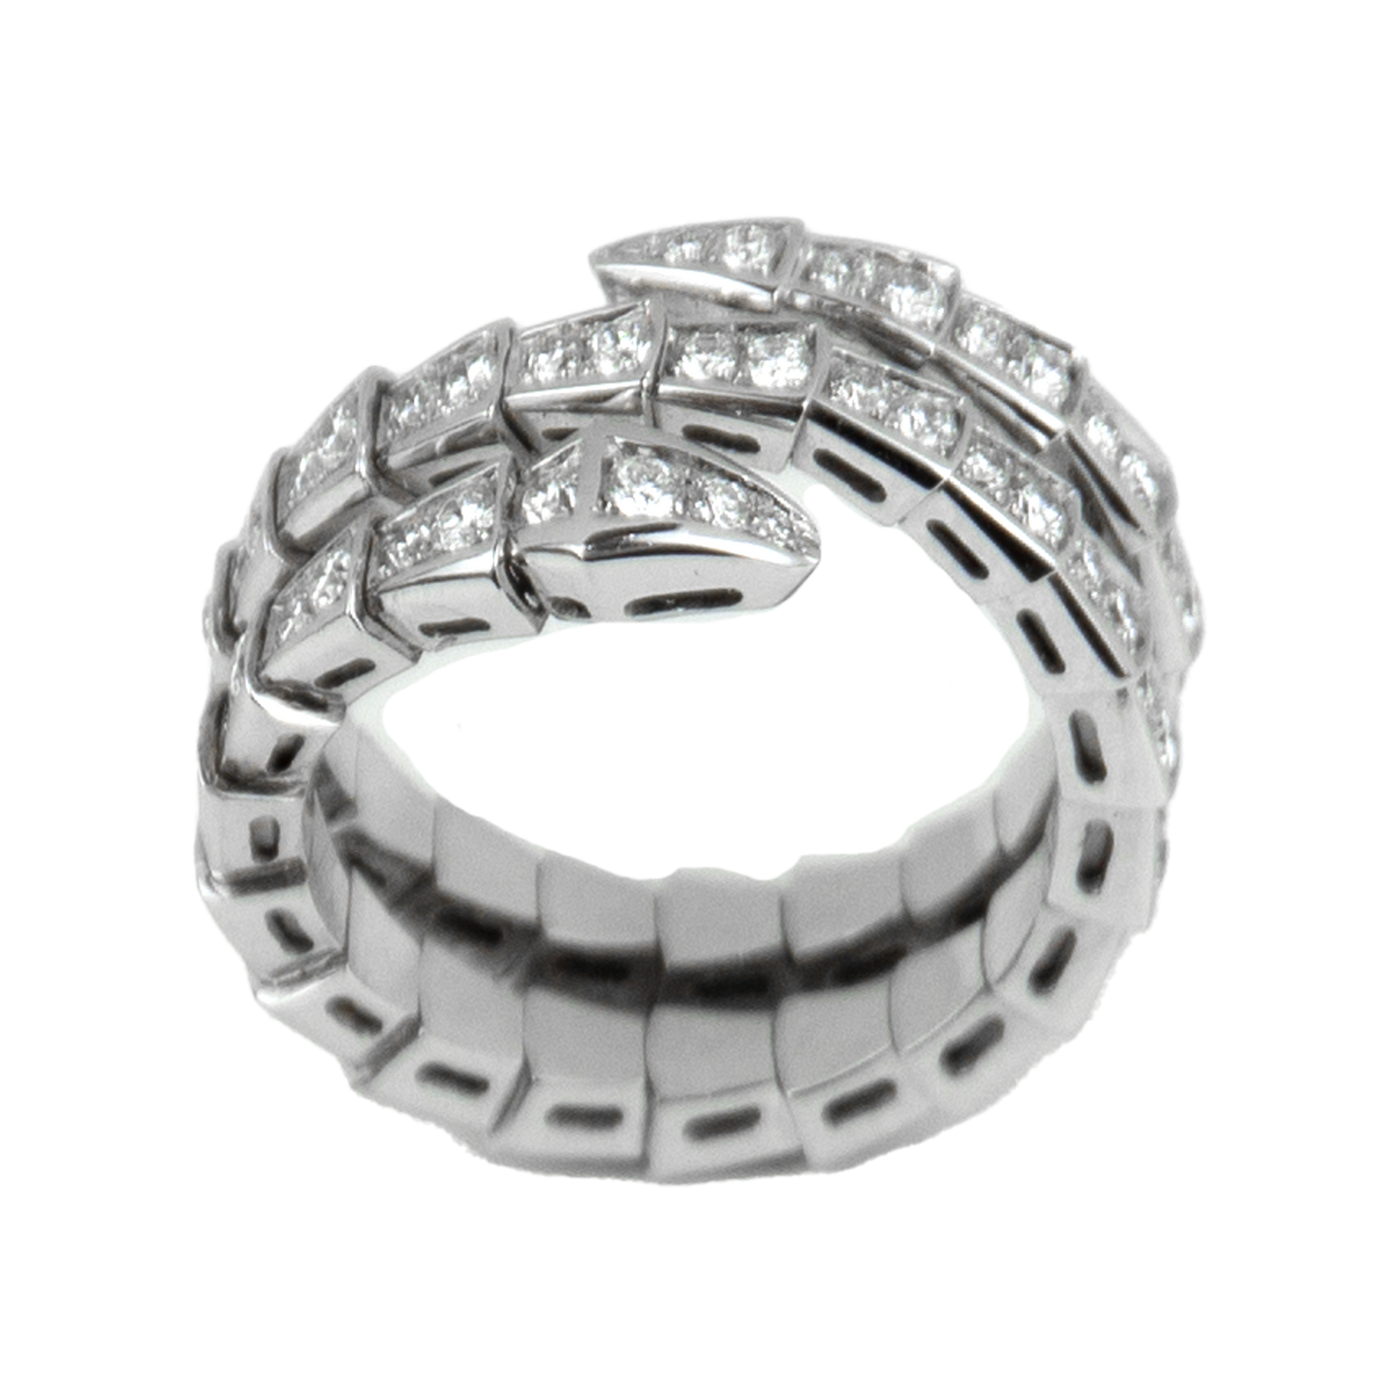 Bulgari Serpenti Viper two-coil 18 kt white gold ring with pavé diamonds